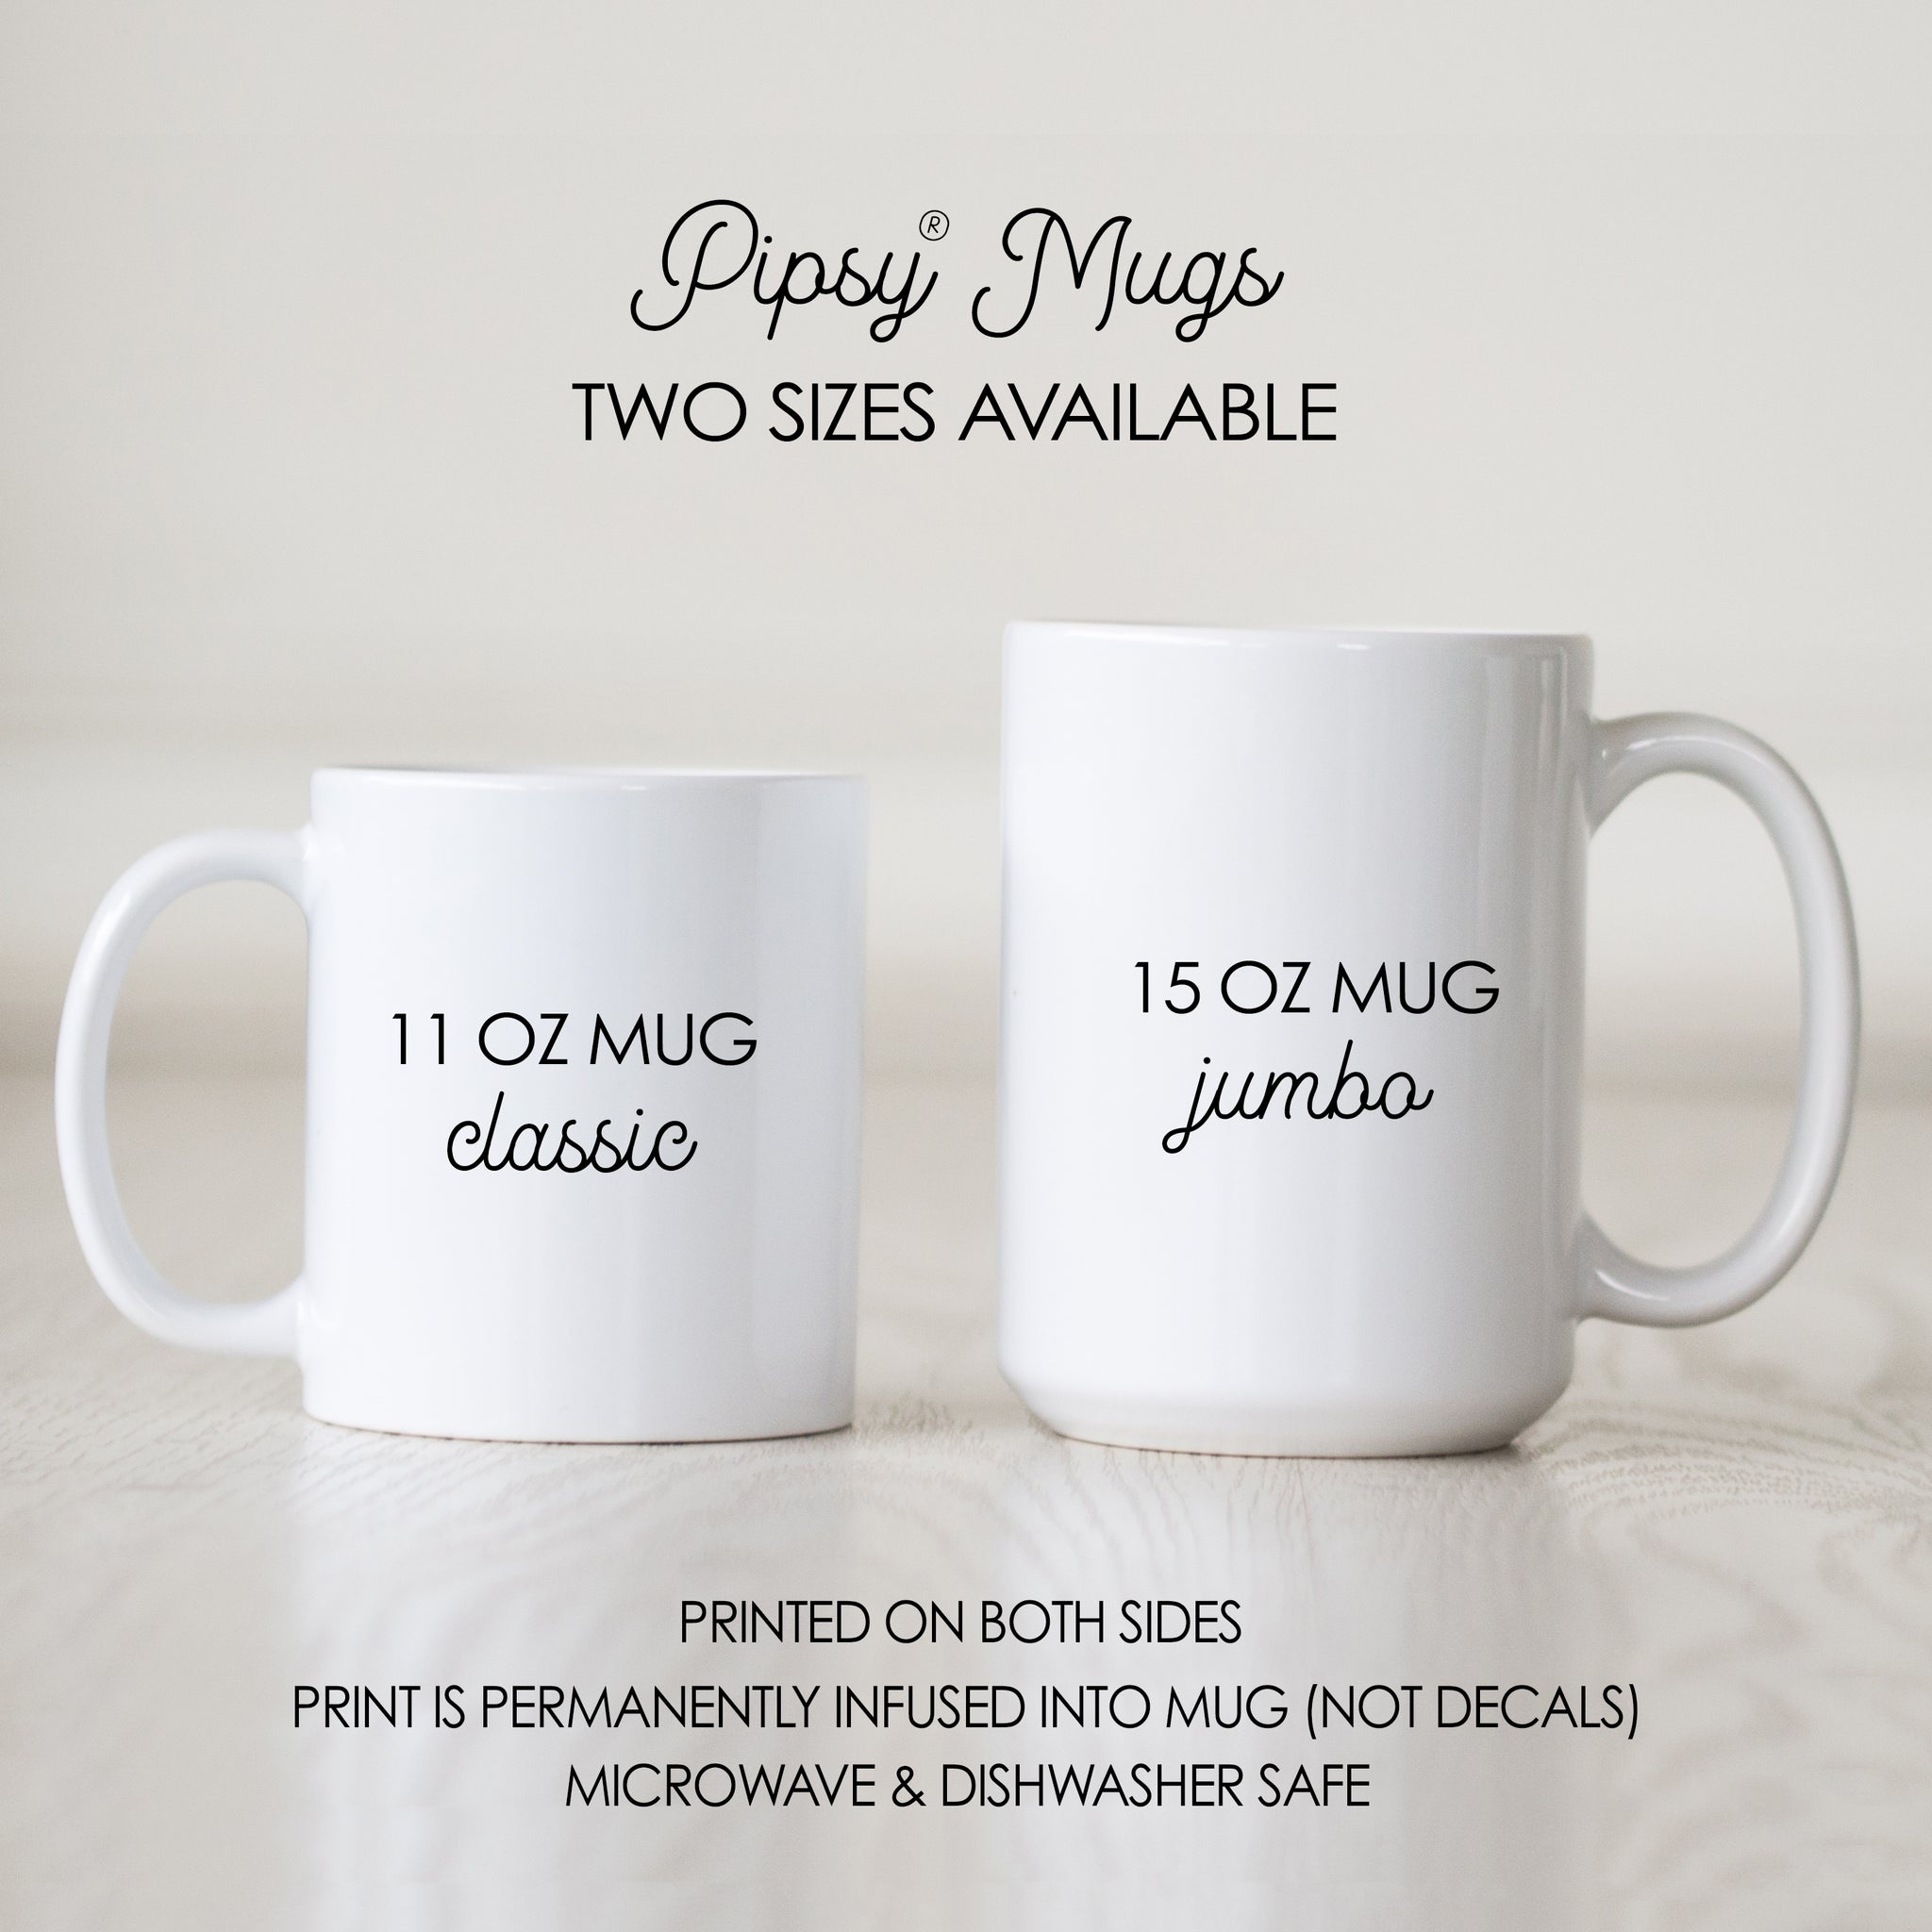 Papa Bear Mug, Ceramic Coffee Mugs, 19Oz, Fun Gift Mug-Papa Bear